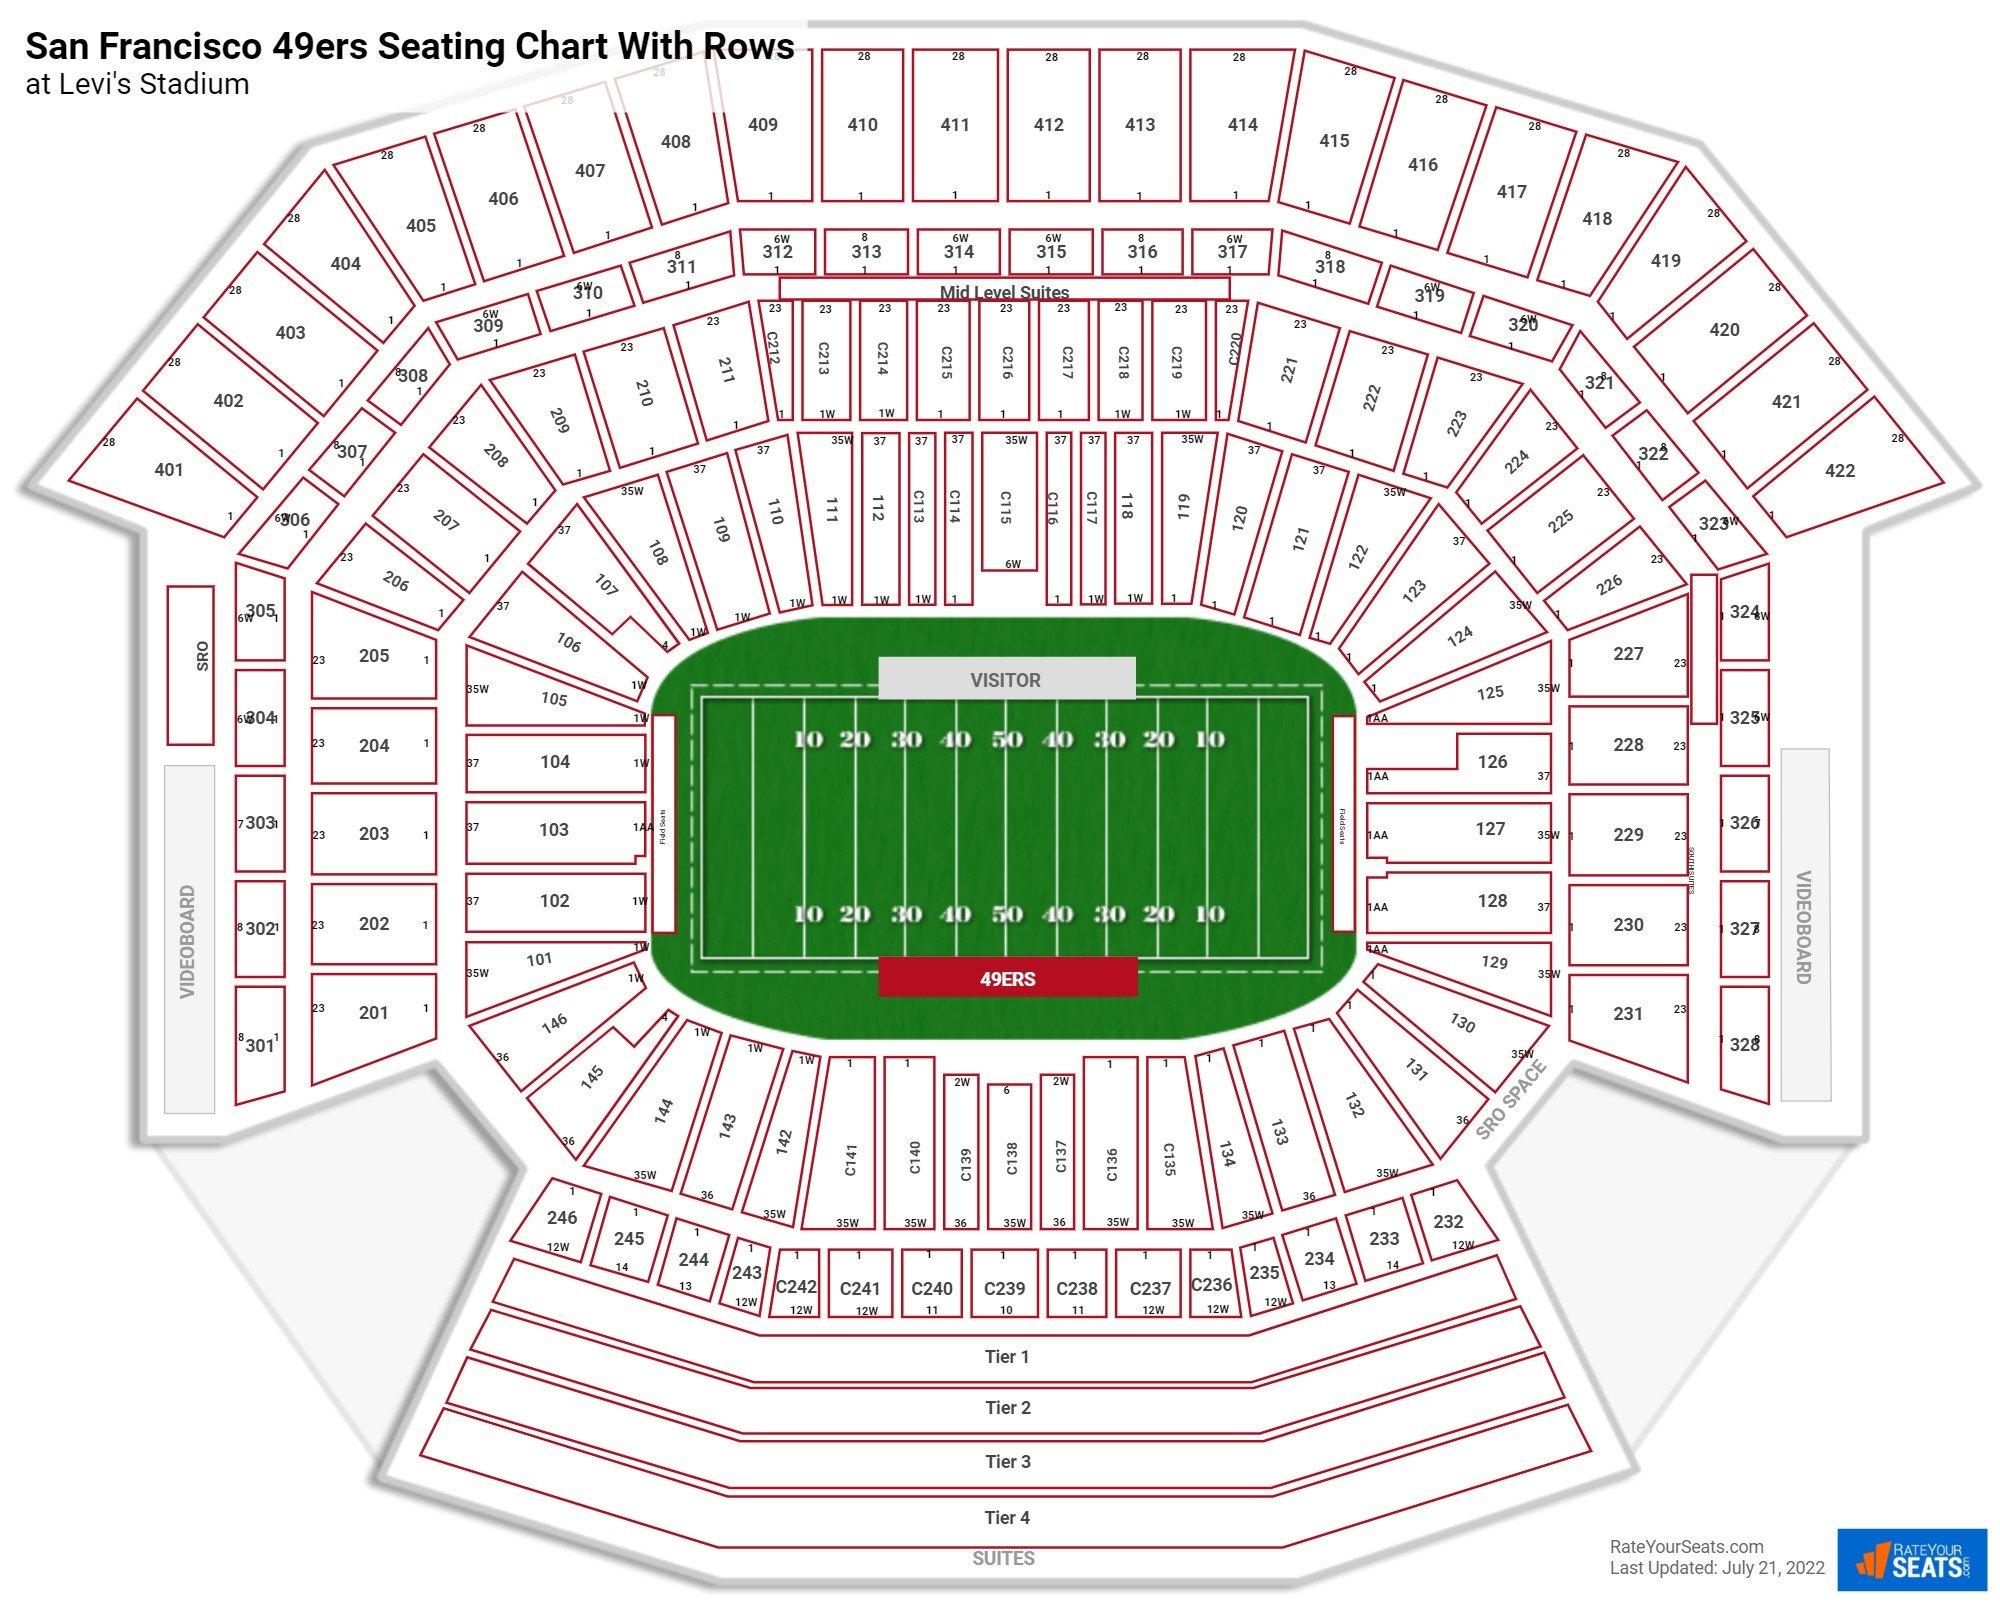 levi's stadium seat map - caverlypharmacysolutions.com.